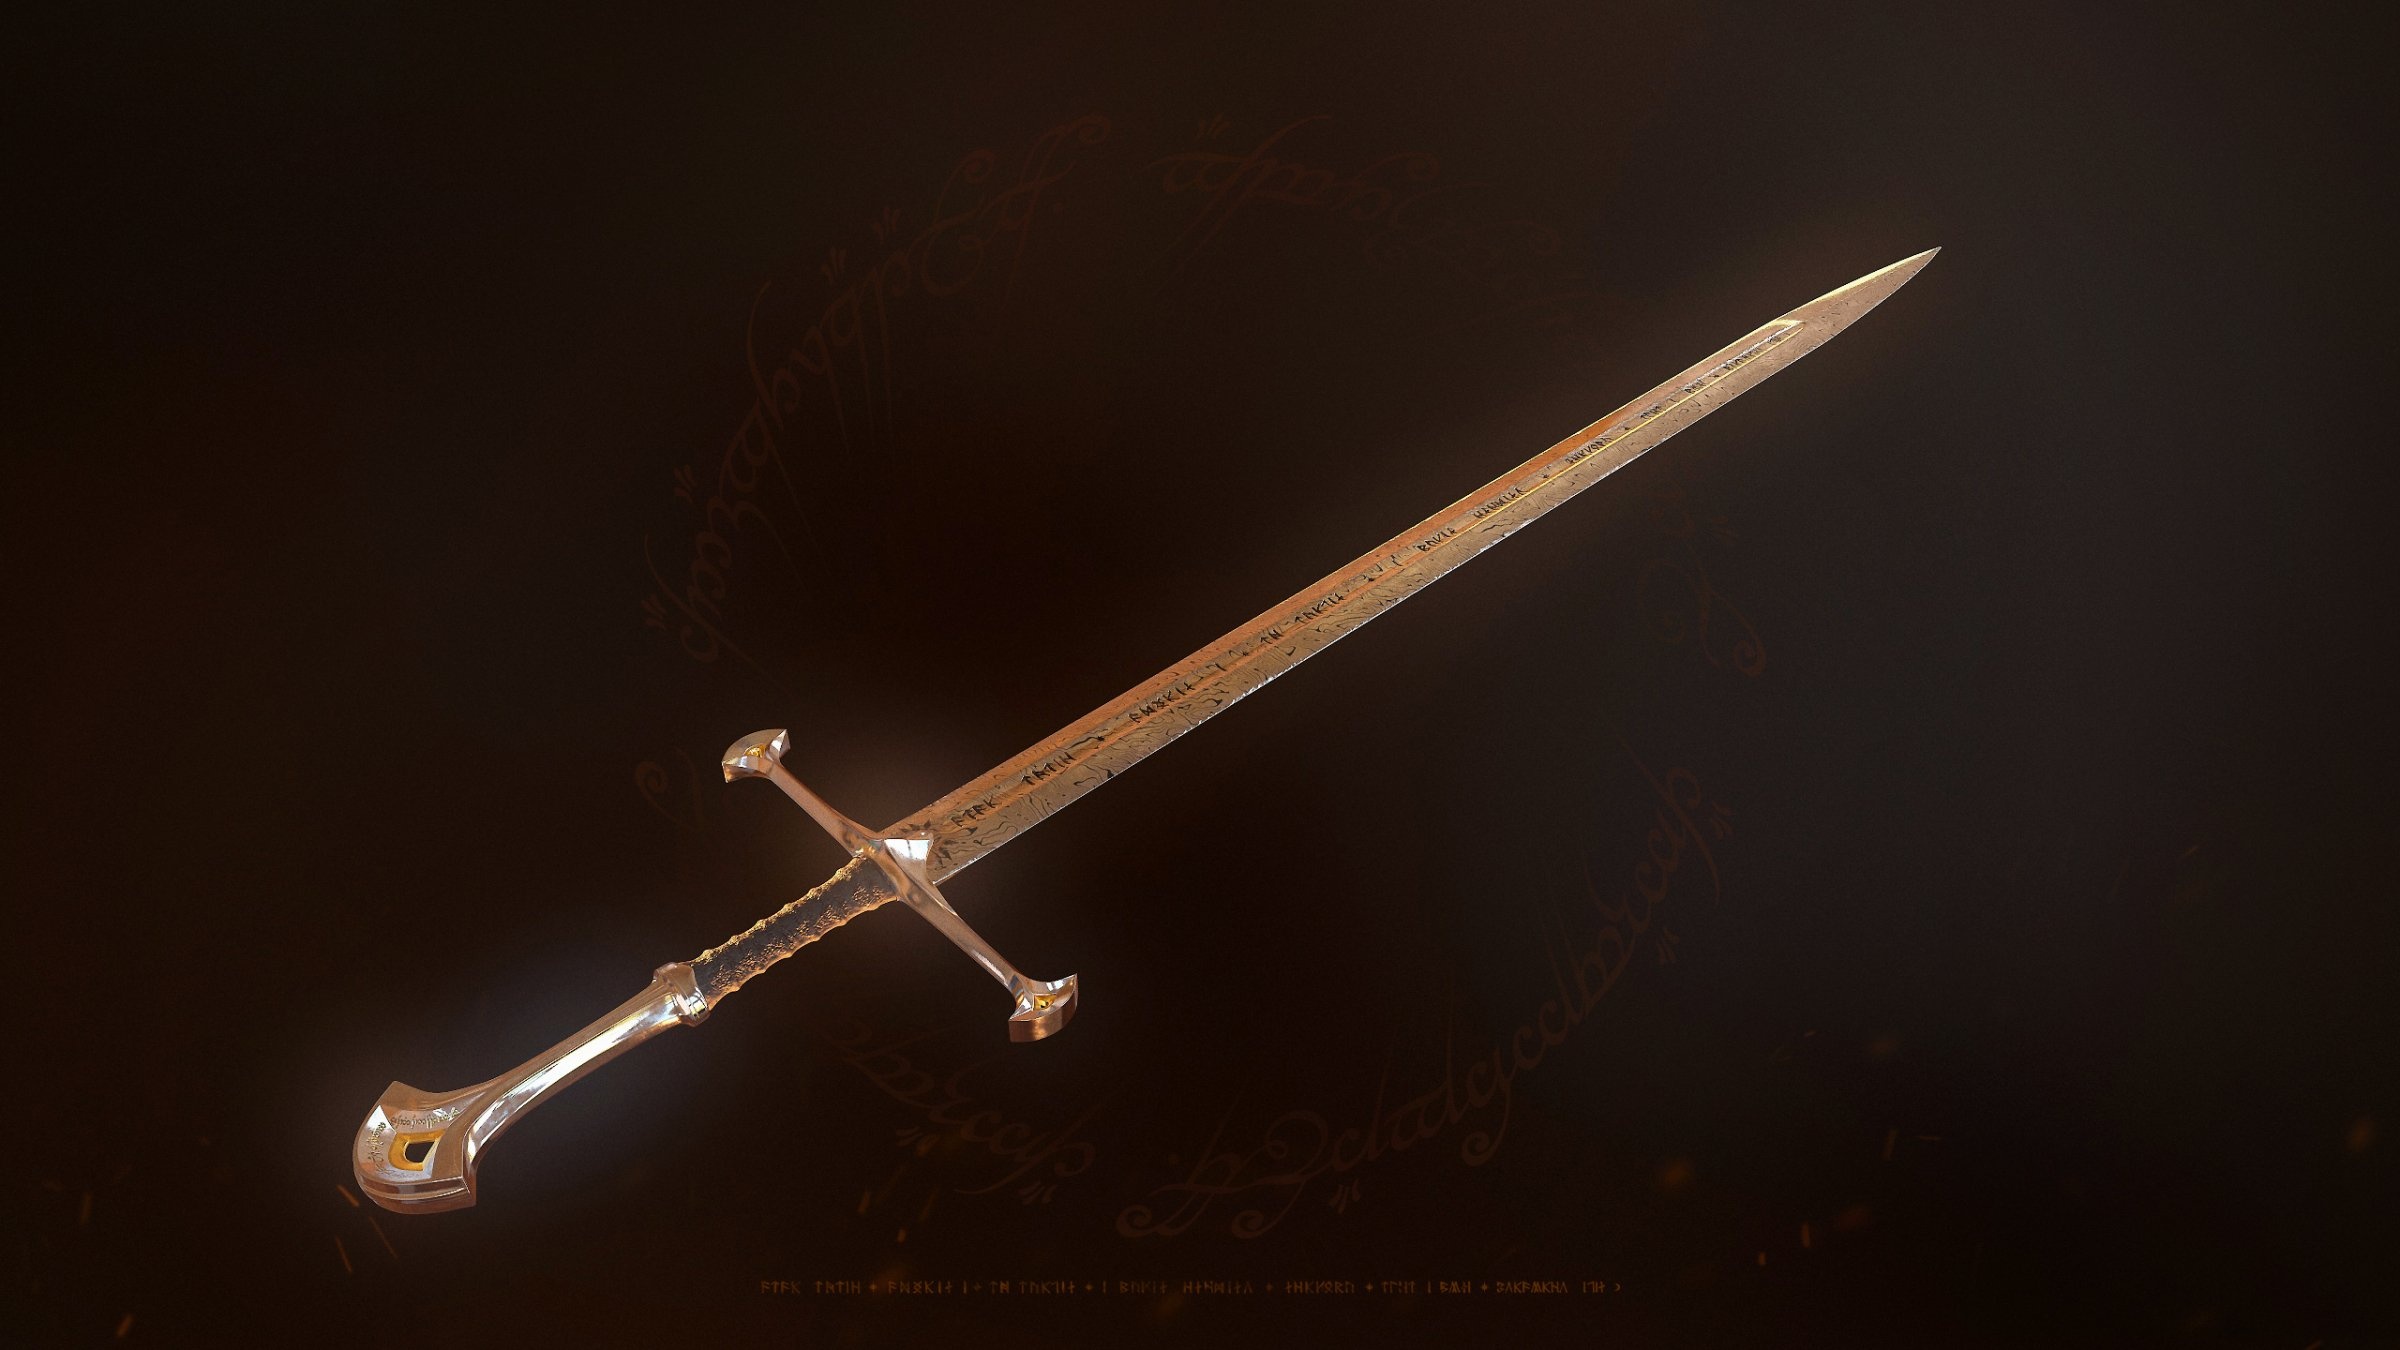 Anduril Sword, Lord of the Rings, King Elessar's sword, 3D model, 2400x1350 HD Desktop